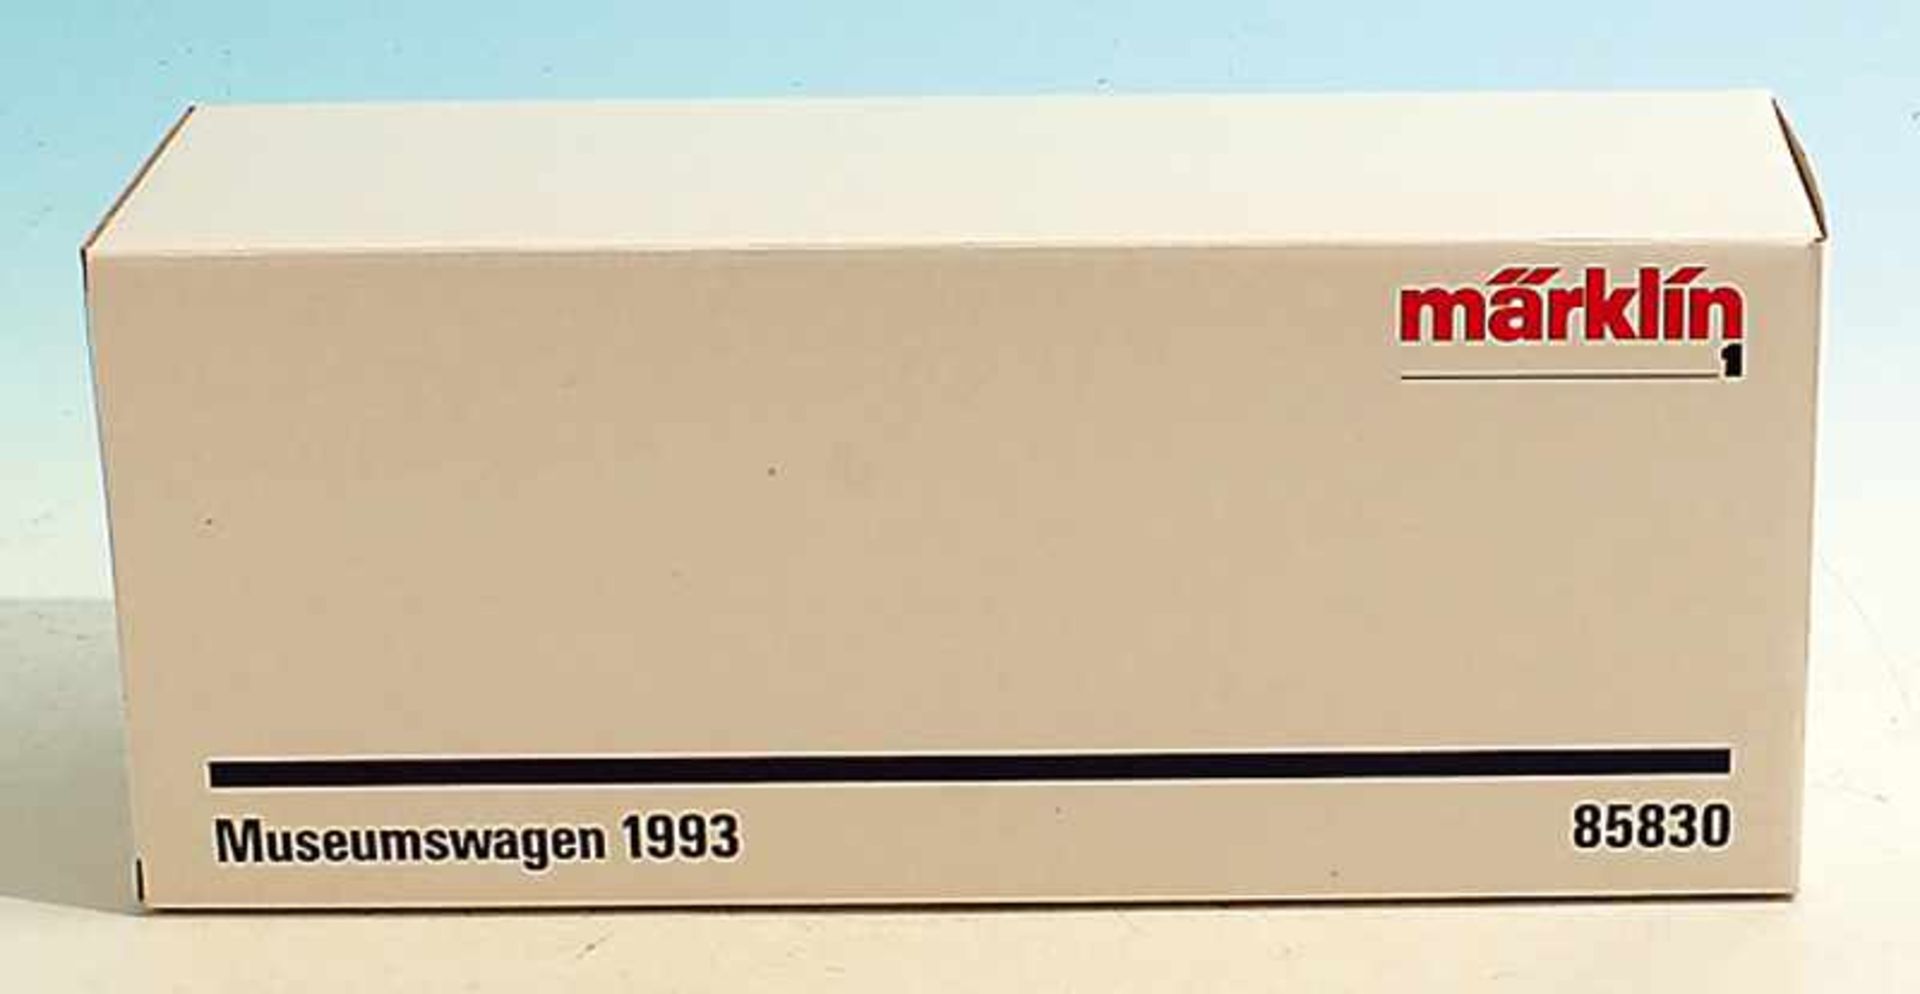 MARKLIN Museumswagen 1993, 85830